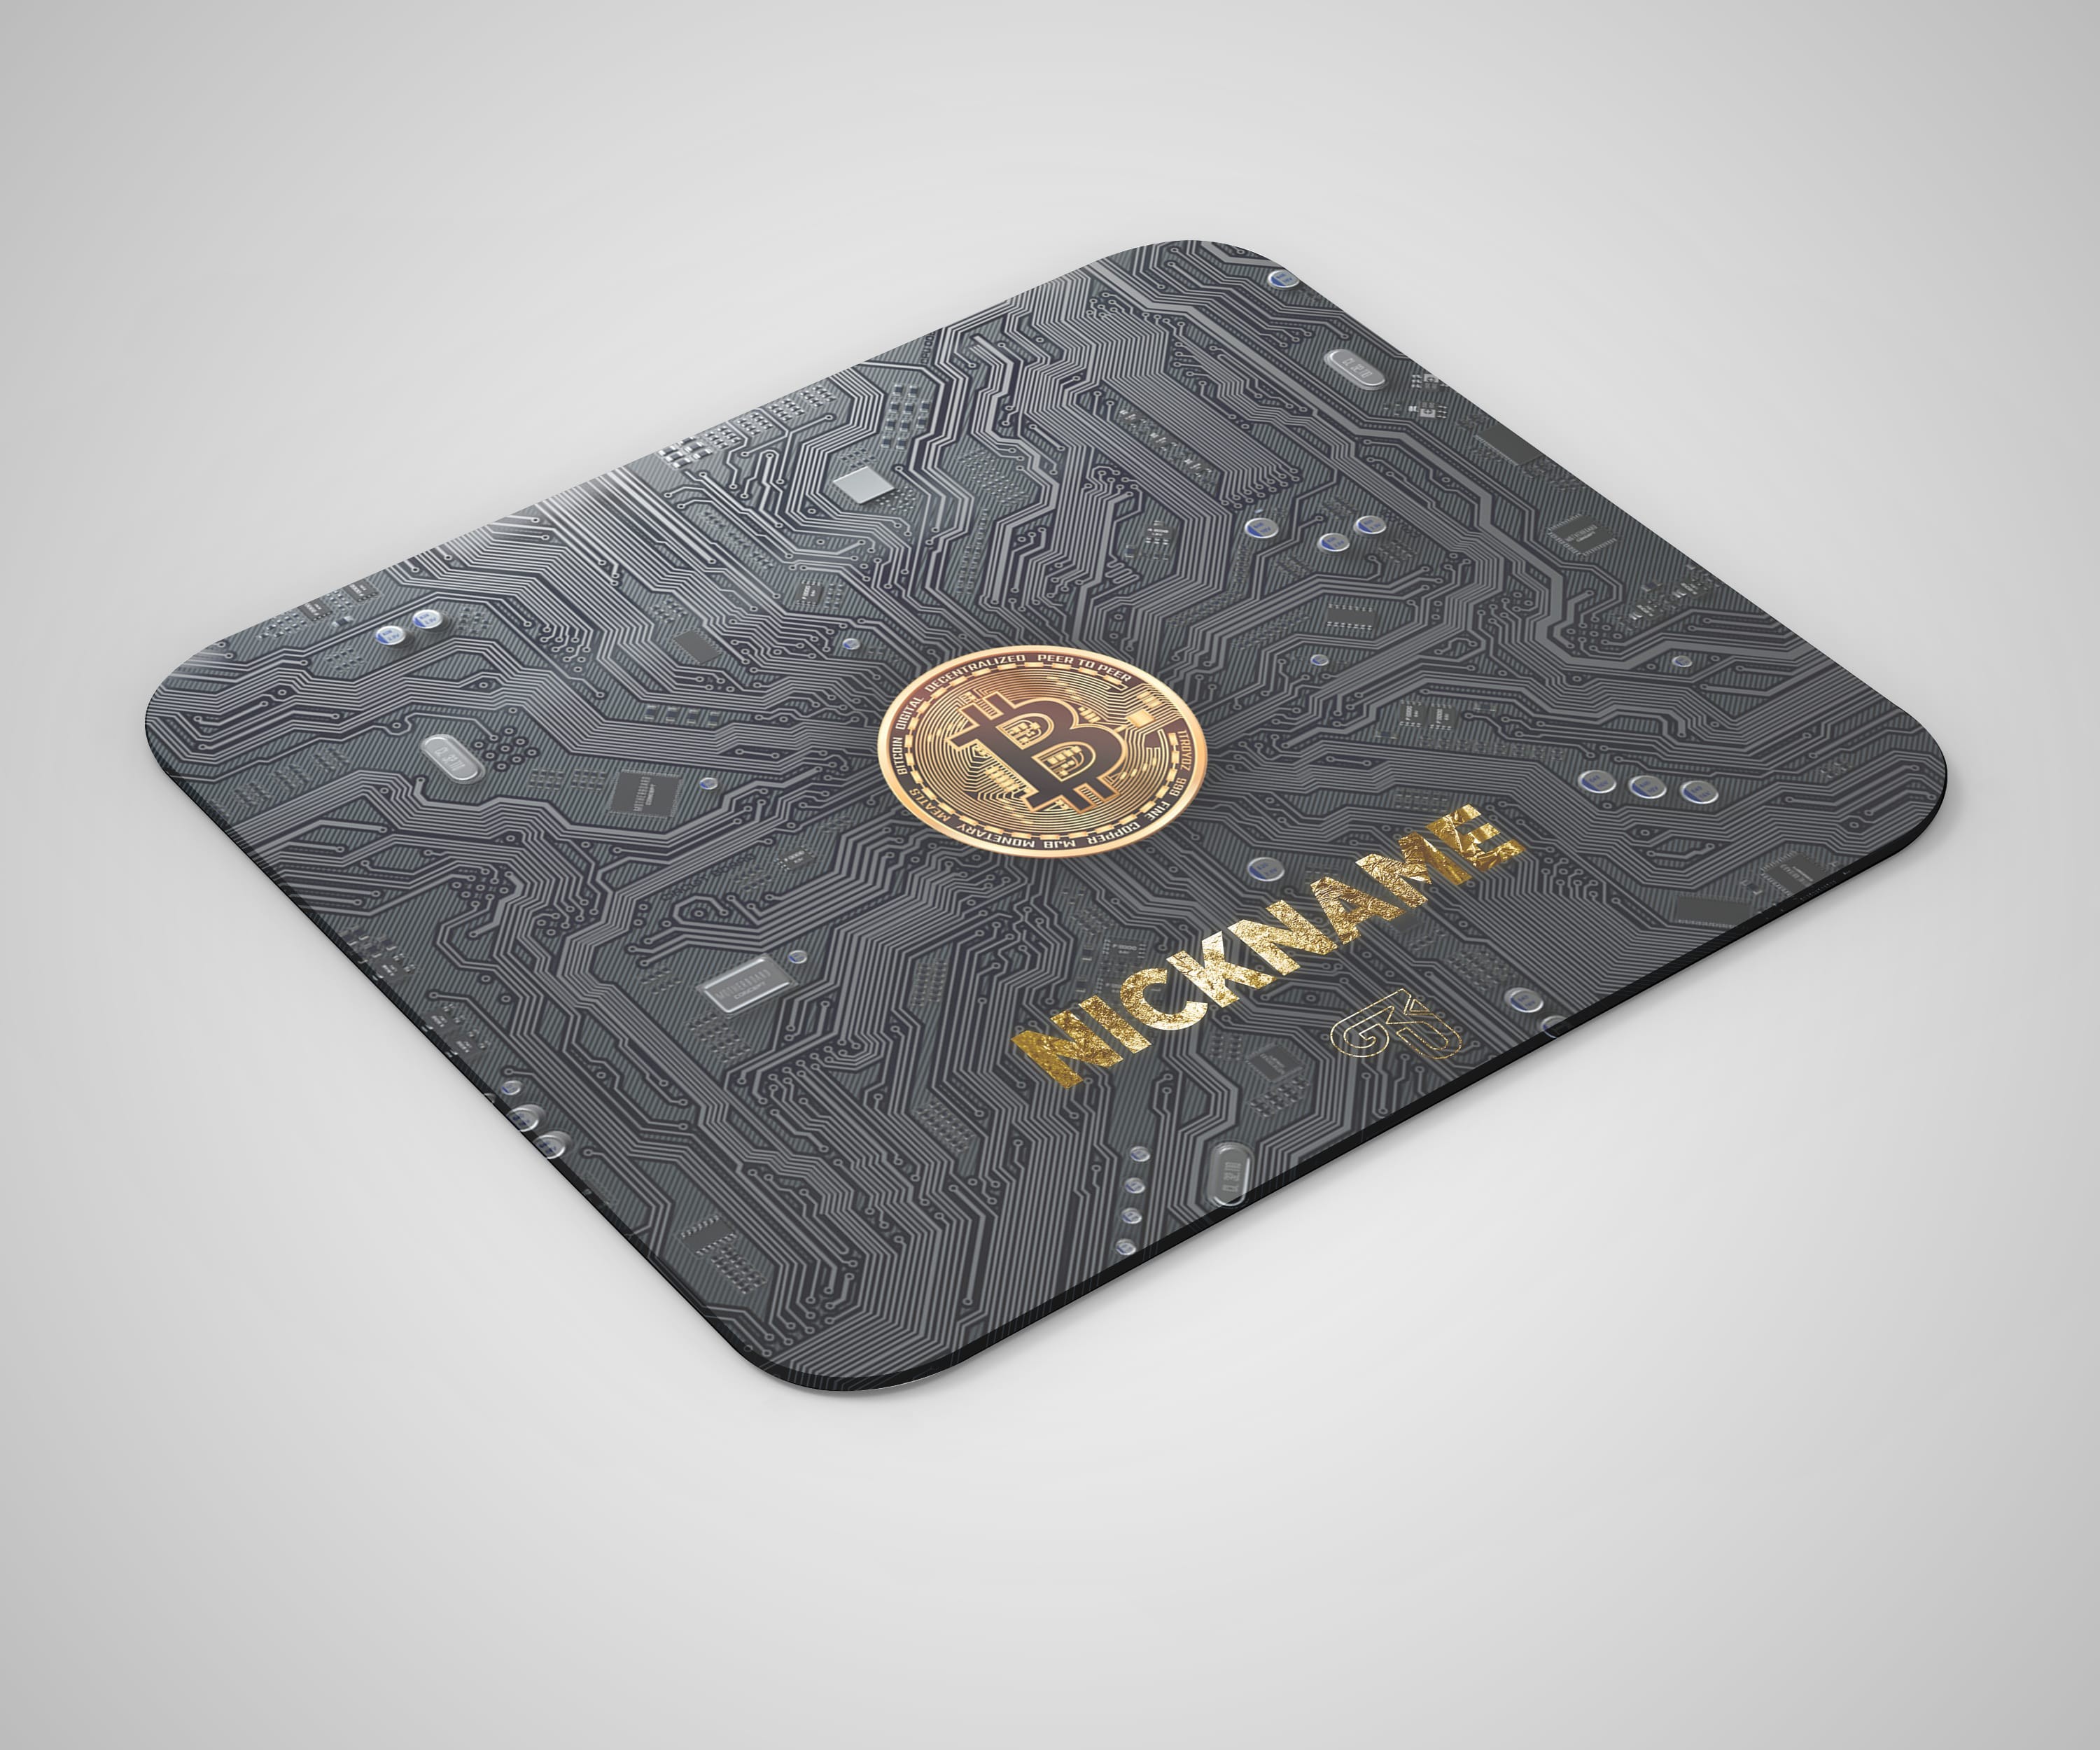 Bitcoin Mousepad - 2 